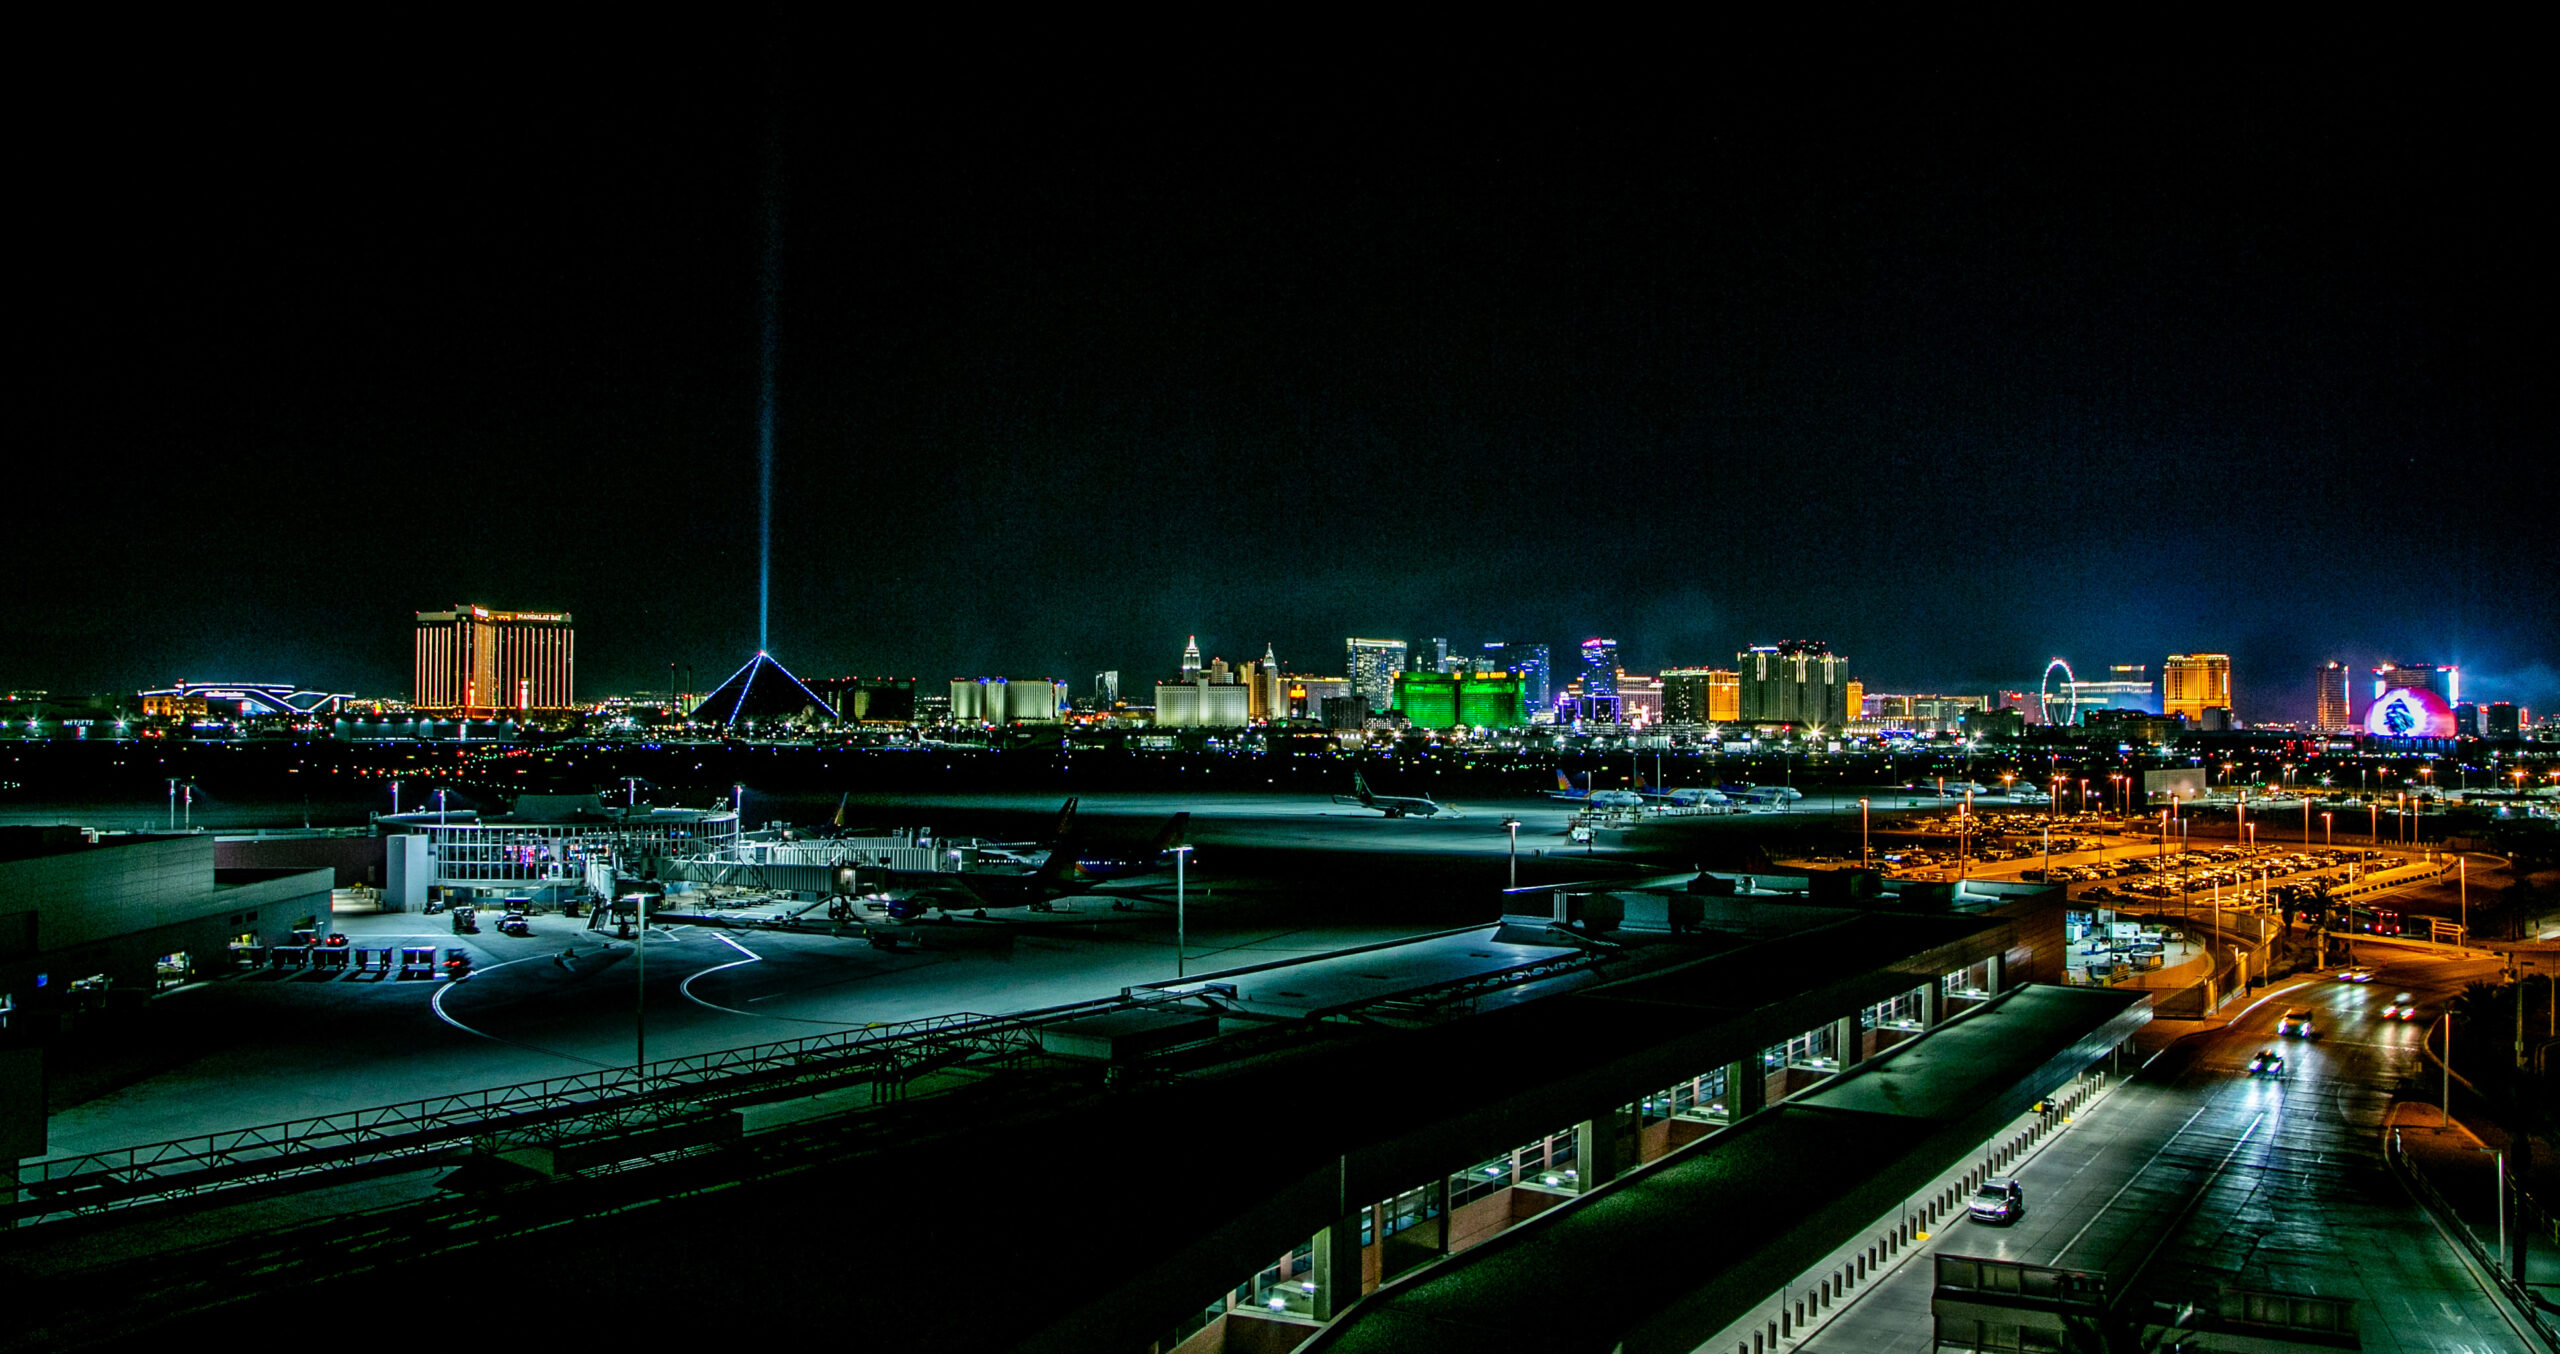 Harry Reid International Airport in Las Vegas, Nevada will receive 27.8 million USD